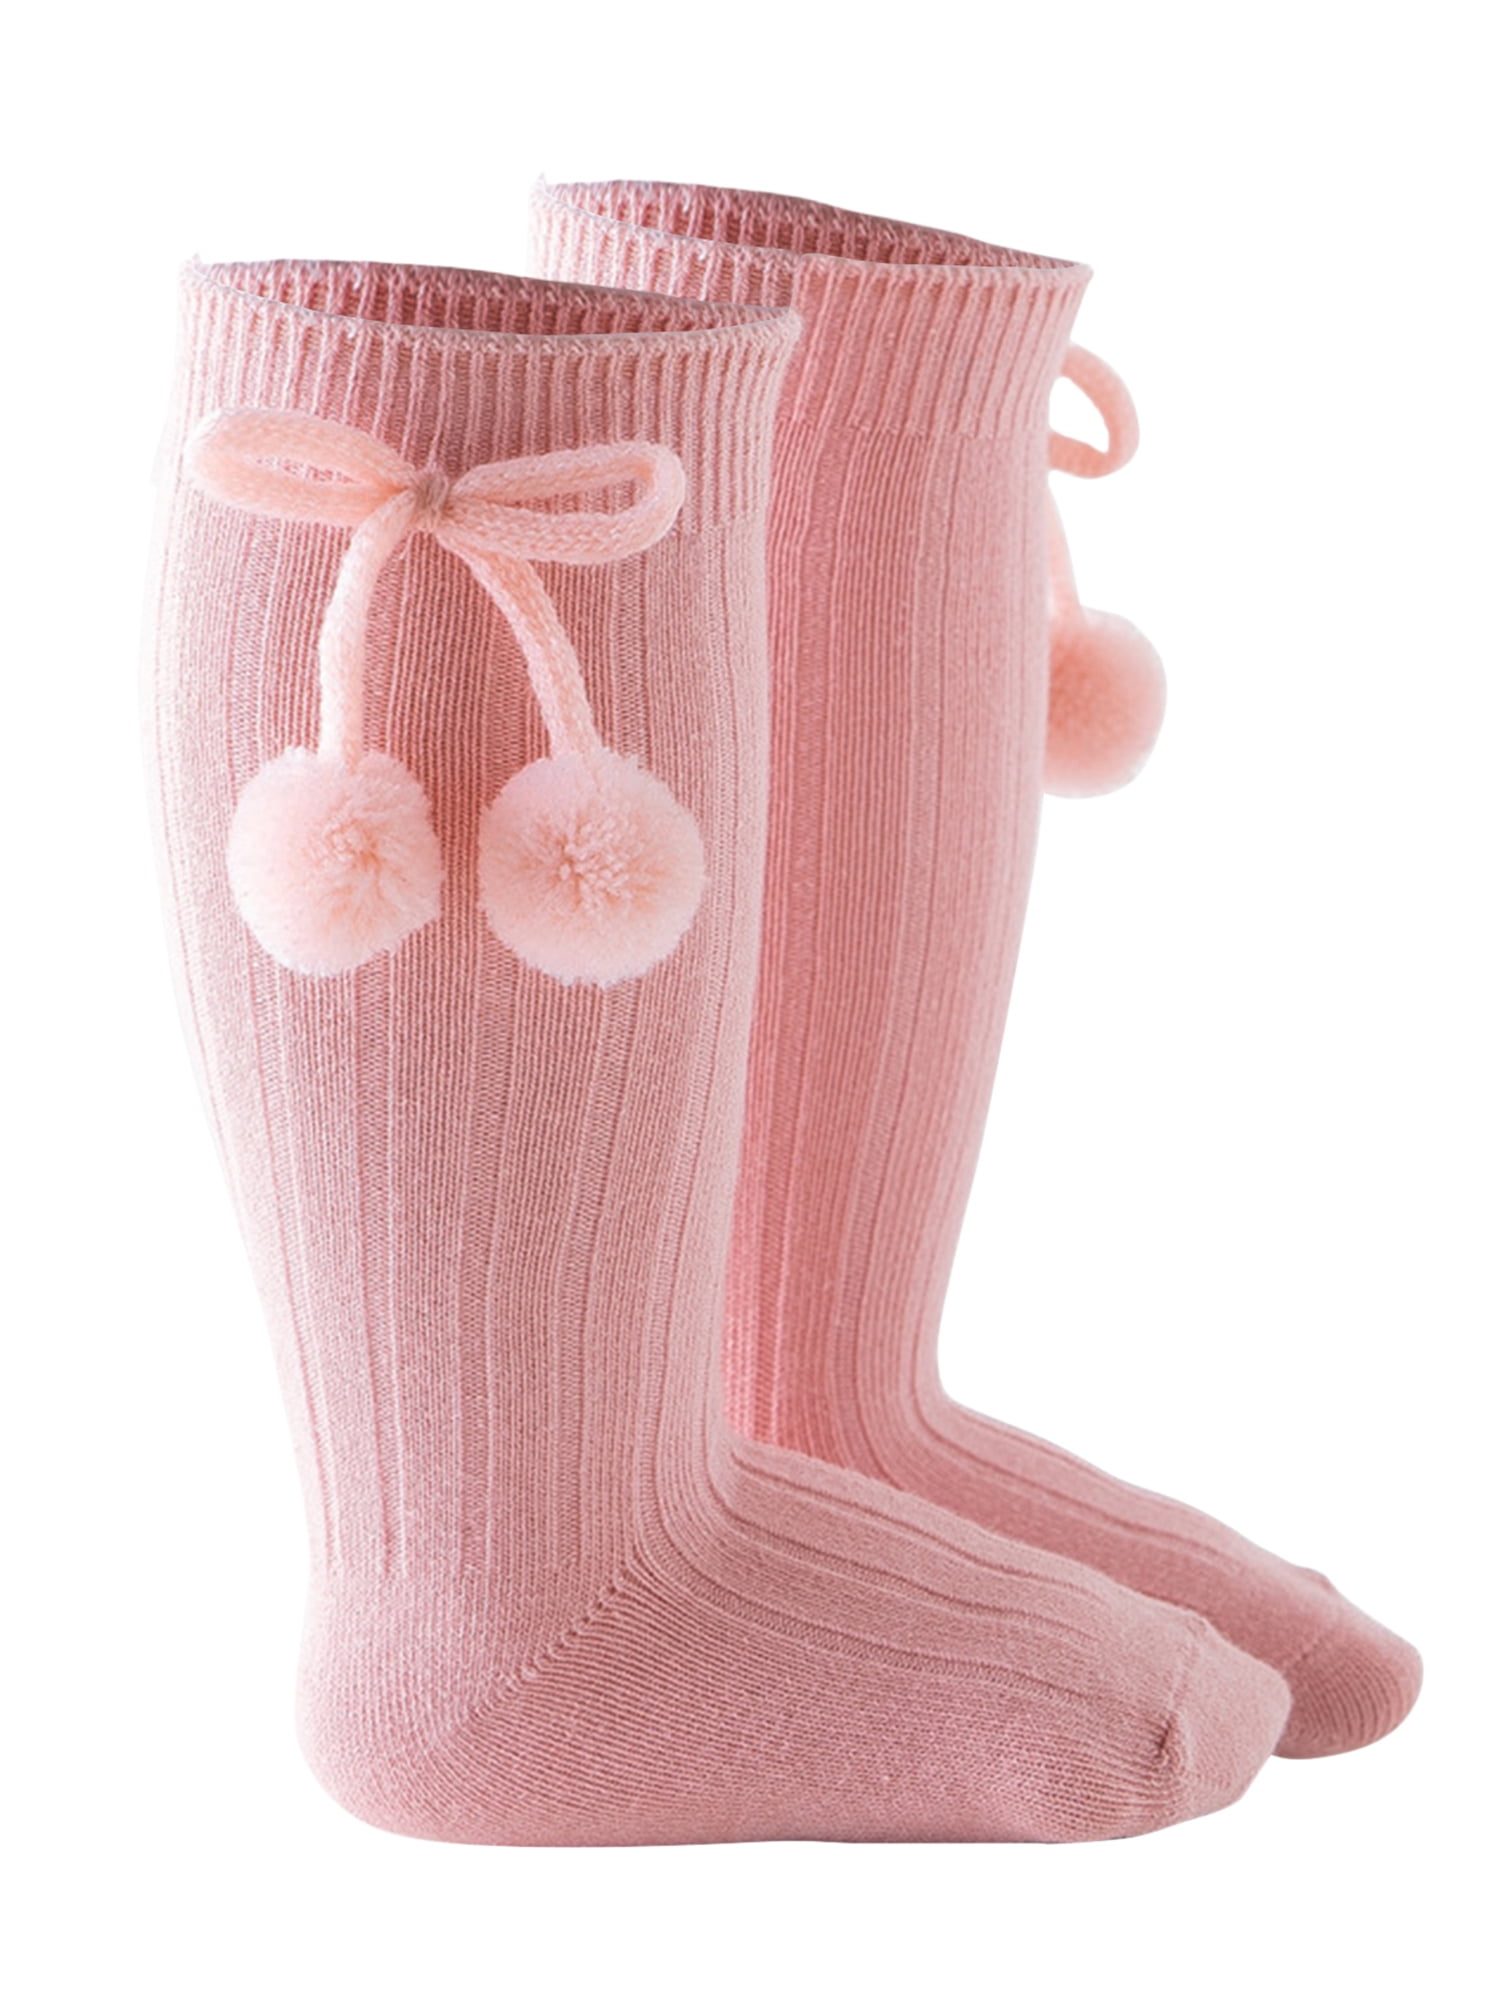 PINK Baby Socks Pom Pom Spanish Romany Style Knee Socks 